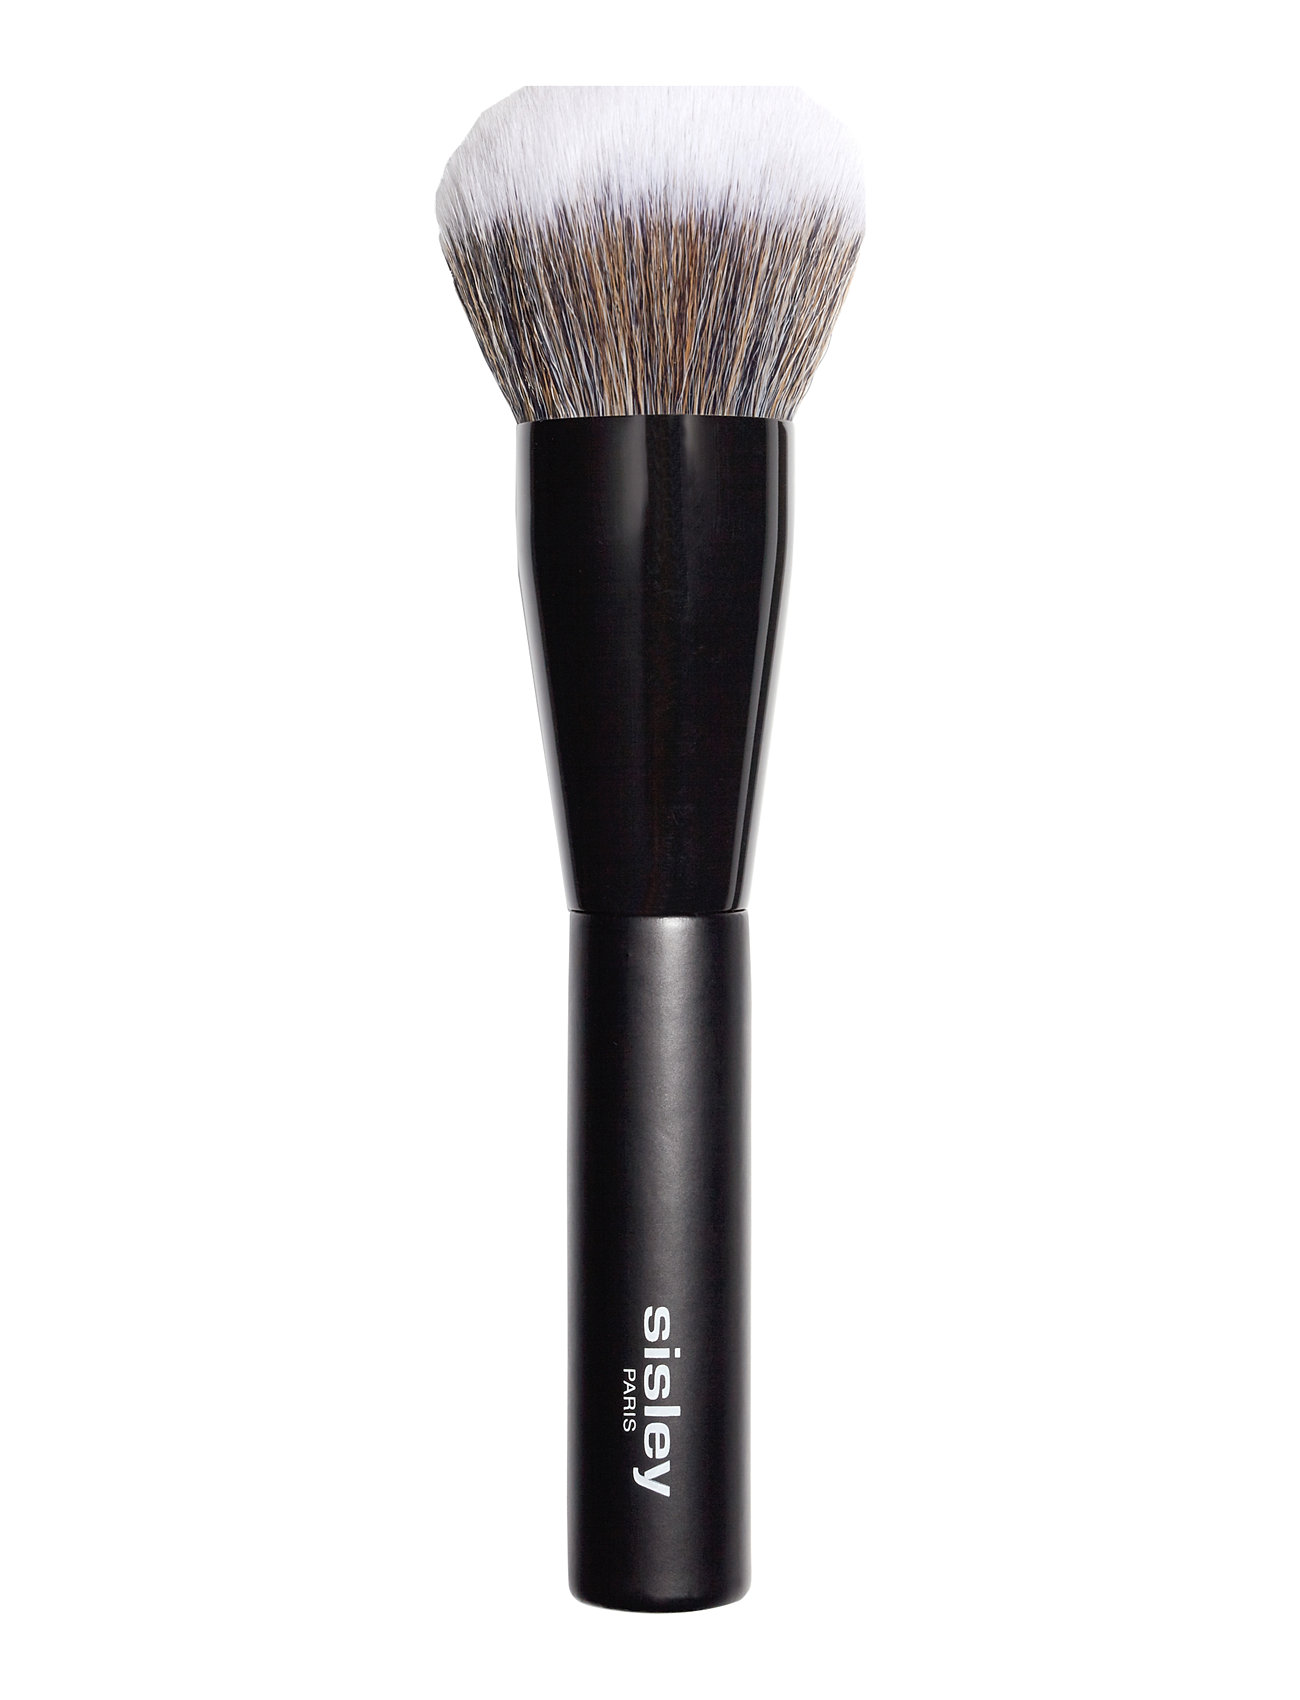 Powder Brush Beauty WOMEN Makeup Makeup Brushes Face Brushes Nude Sisley